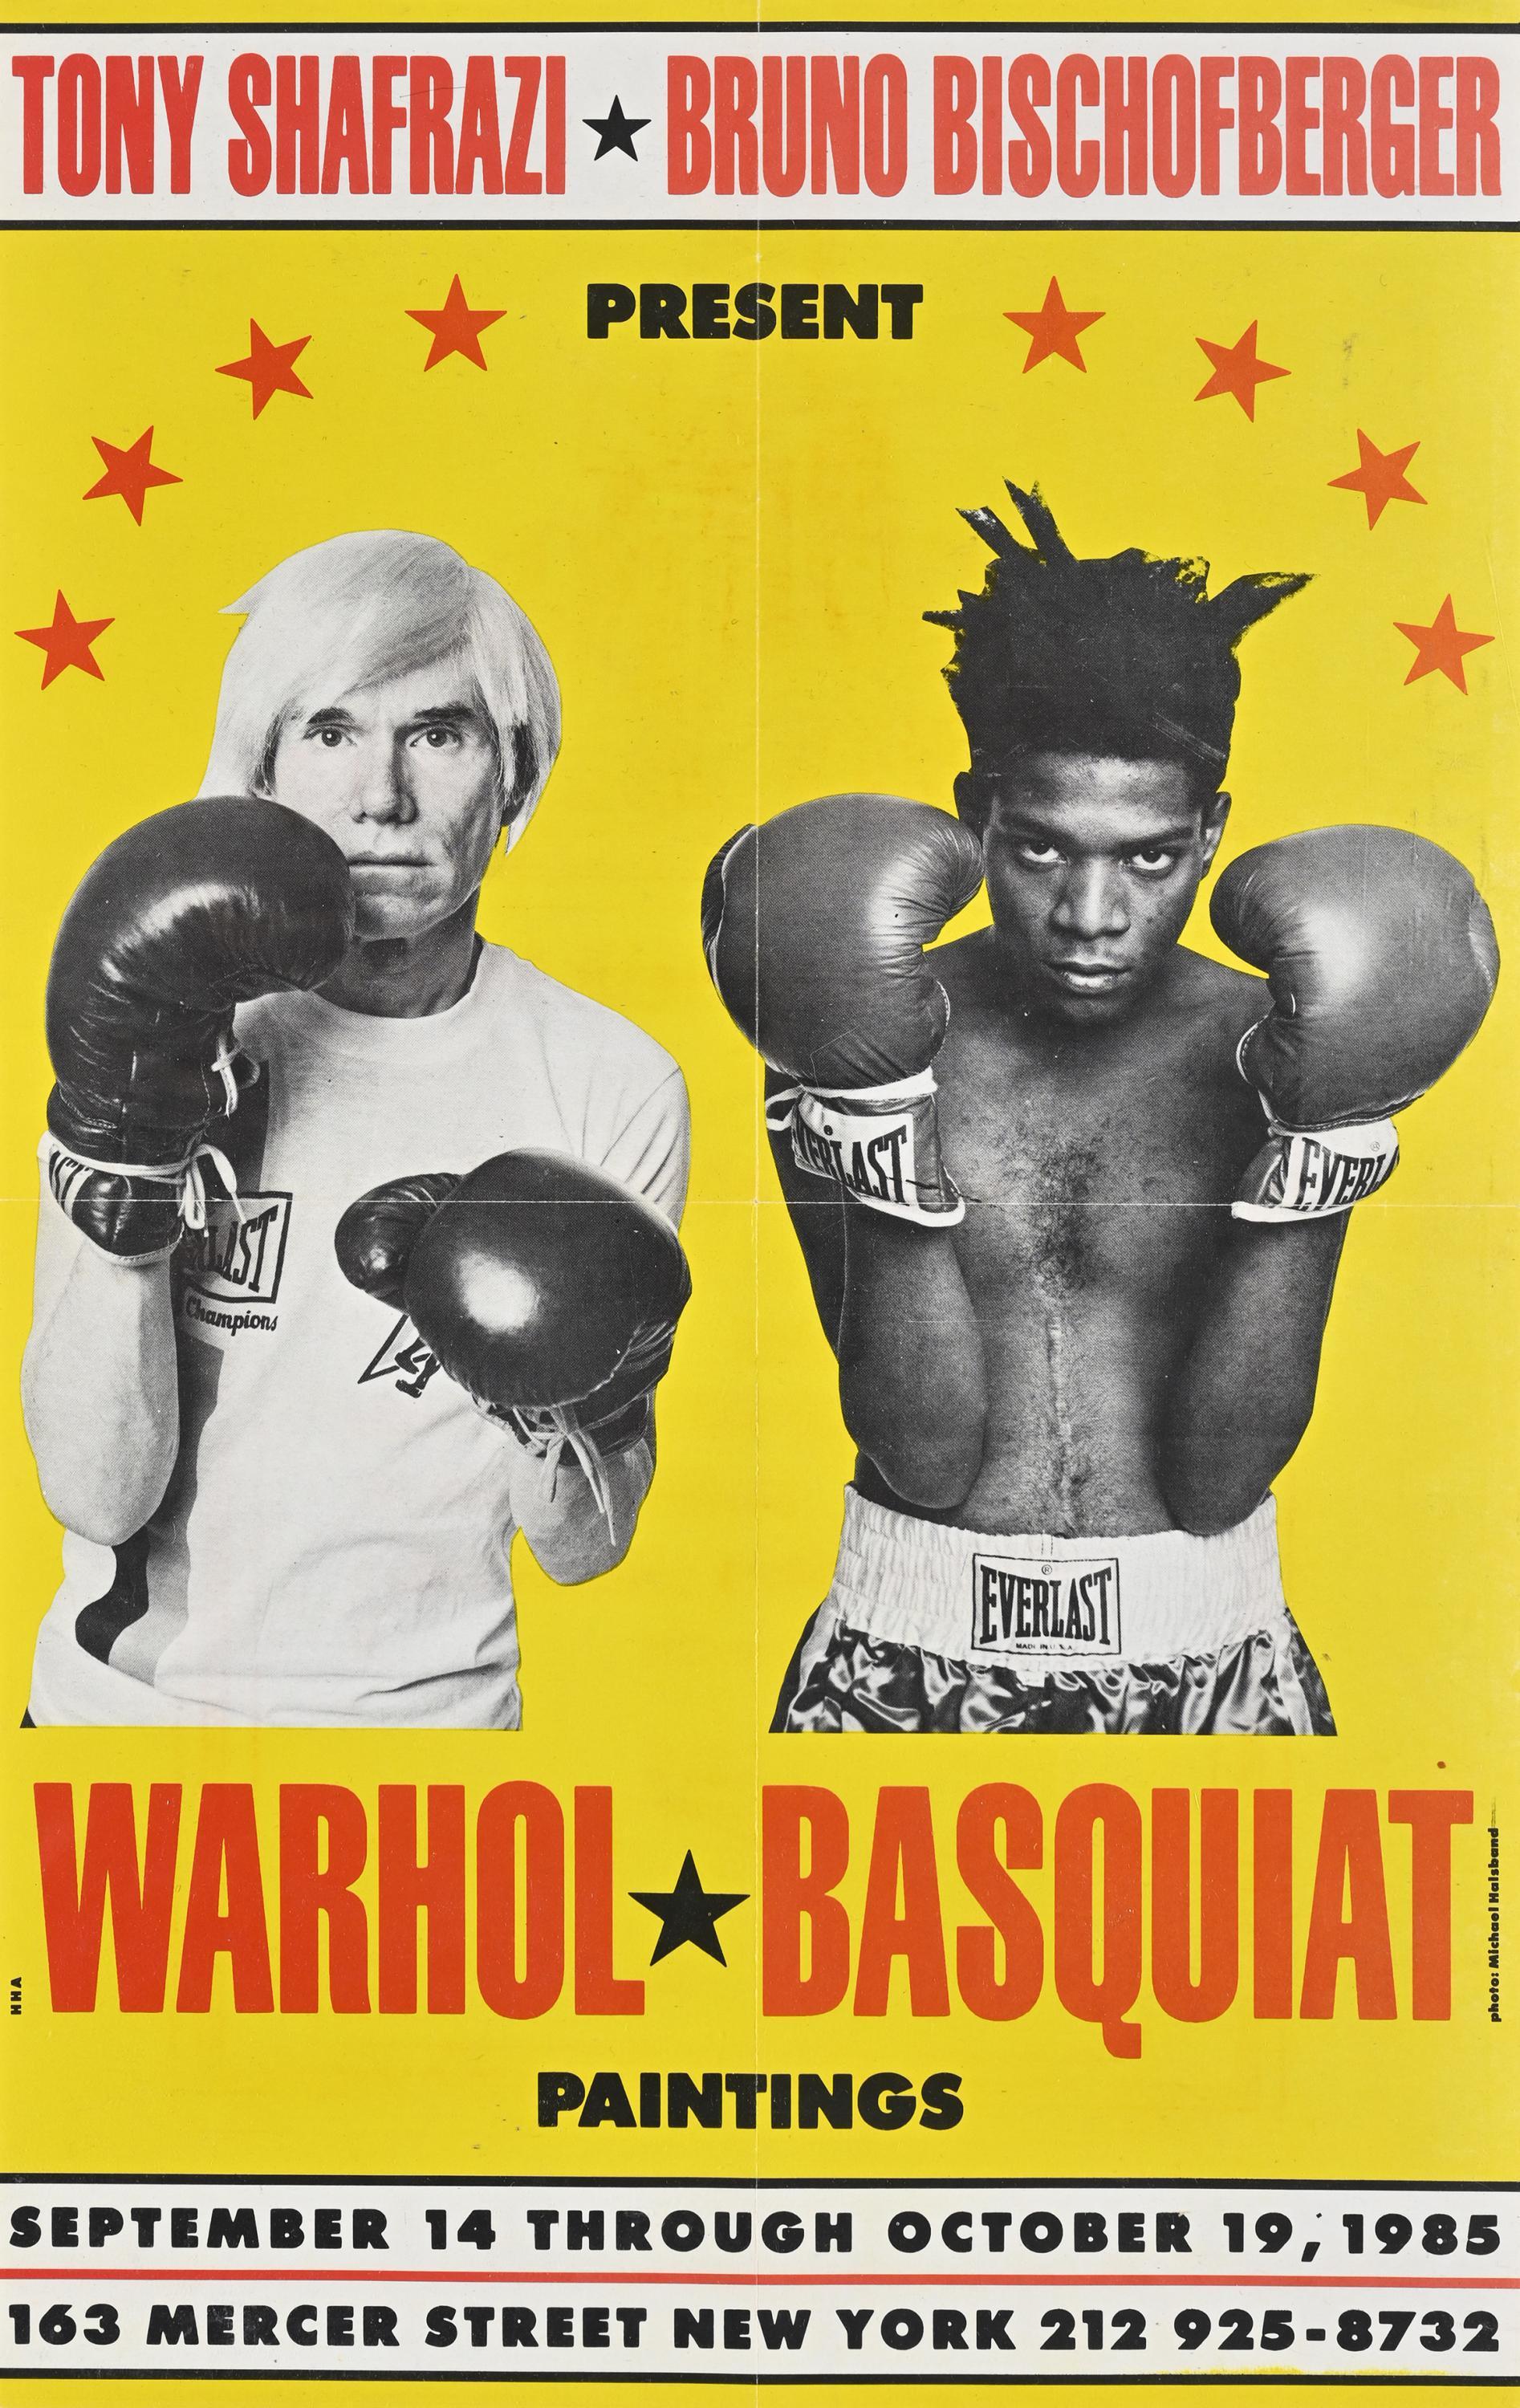 Michael Halsband Figurative Print - Print after Warhol * Basquiat Paintings, 1985